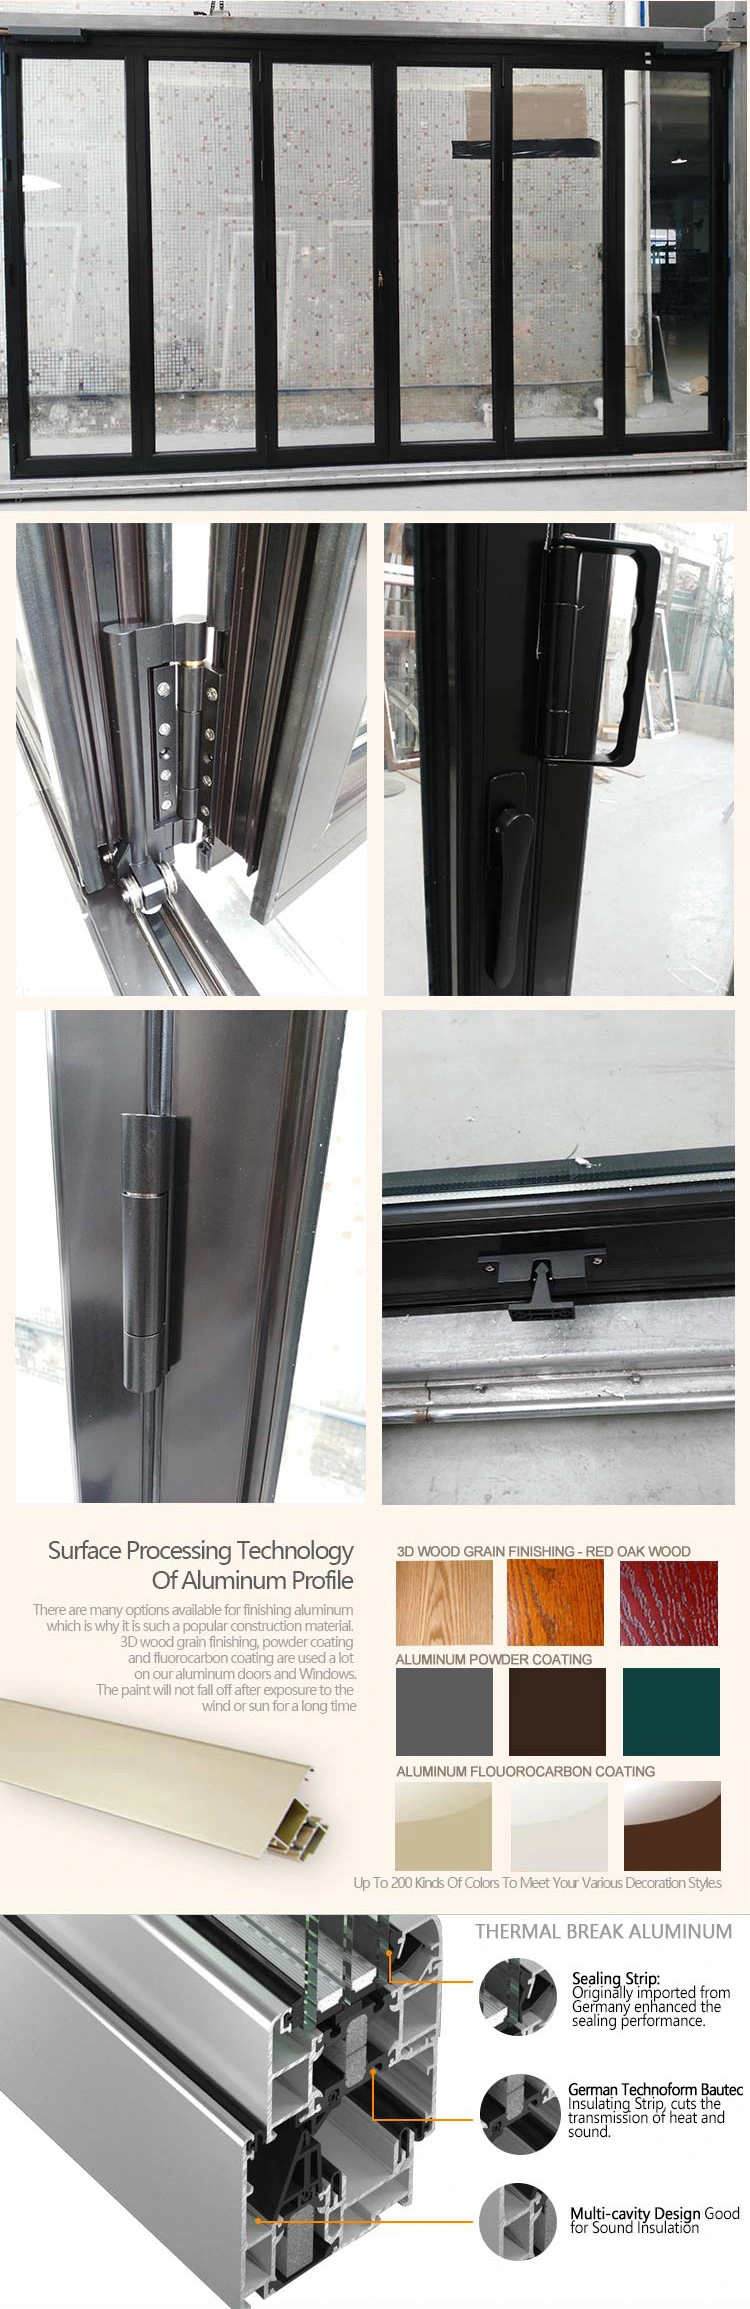 Only Rest 3 Days 20% Discount Aluminum Alloy Bi-Folding Glass Door